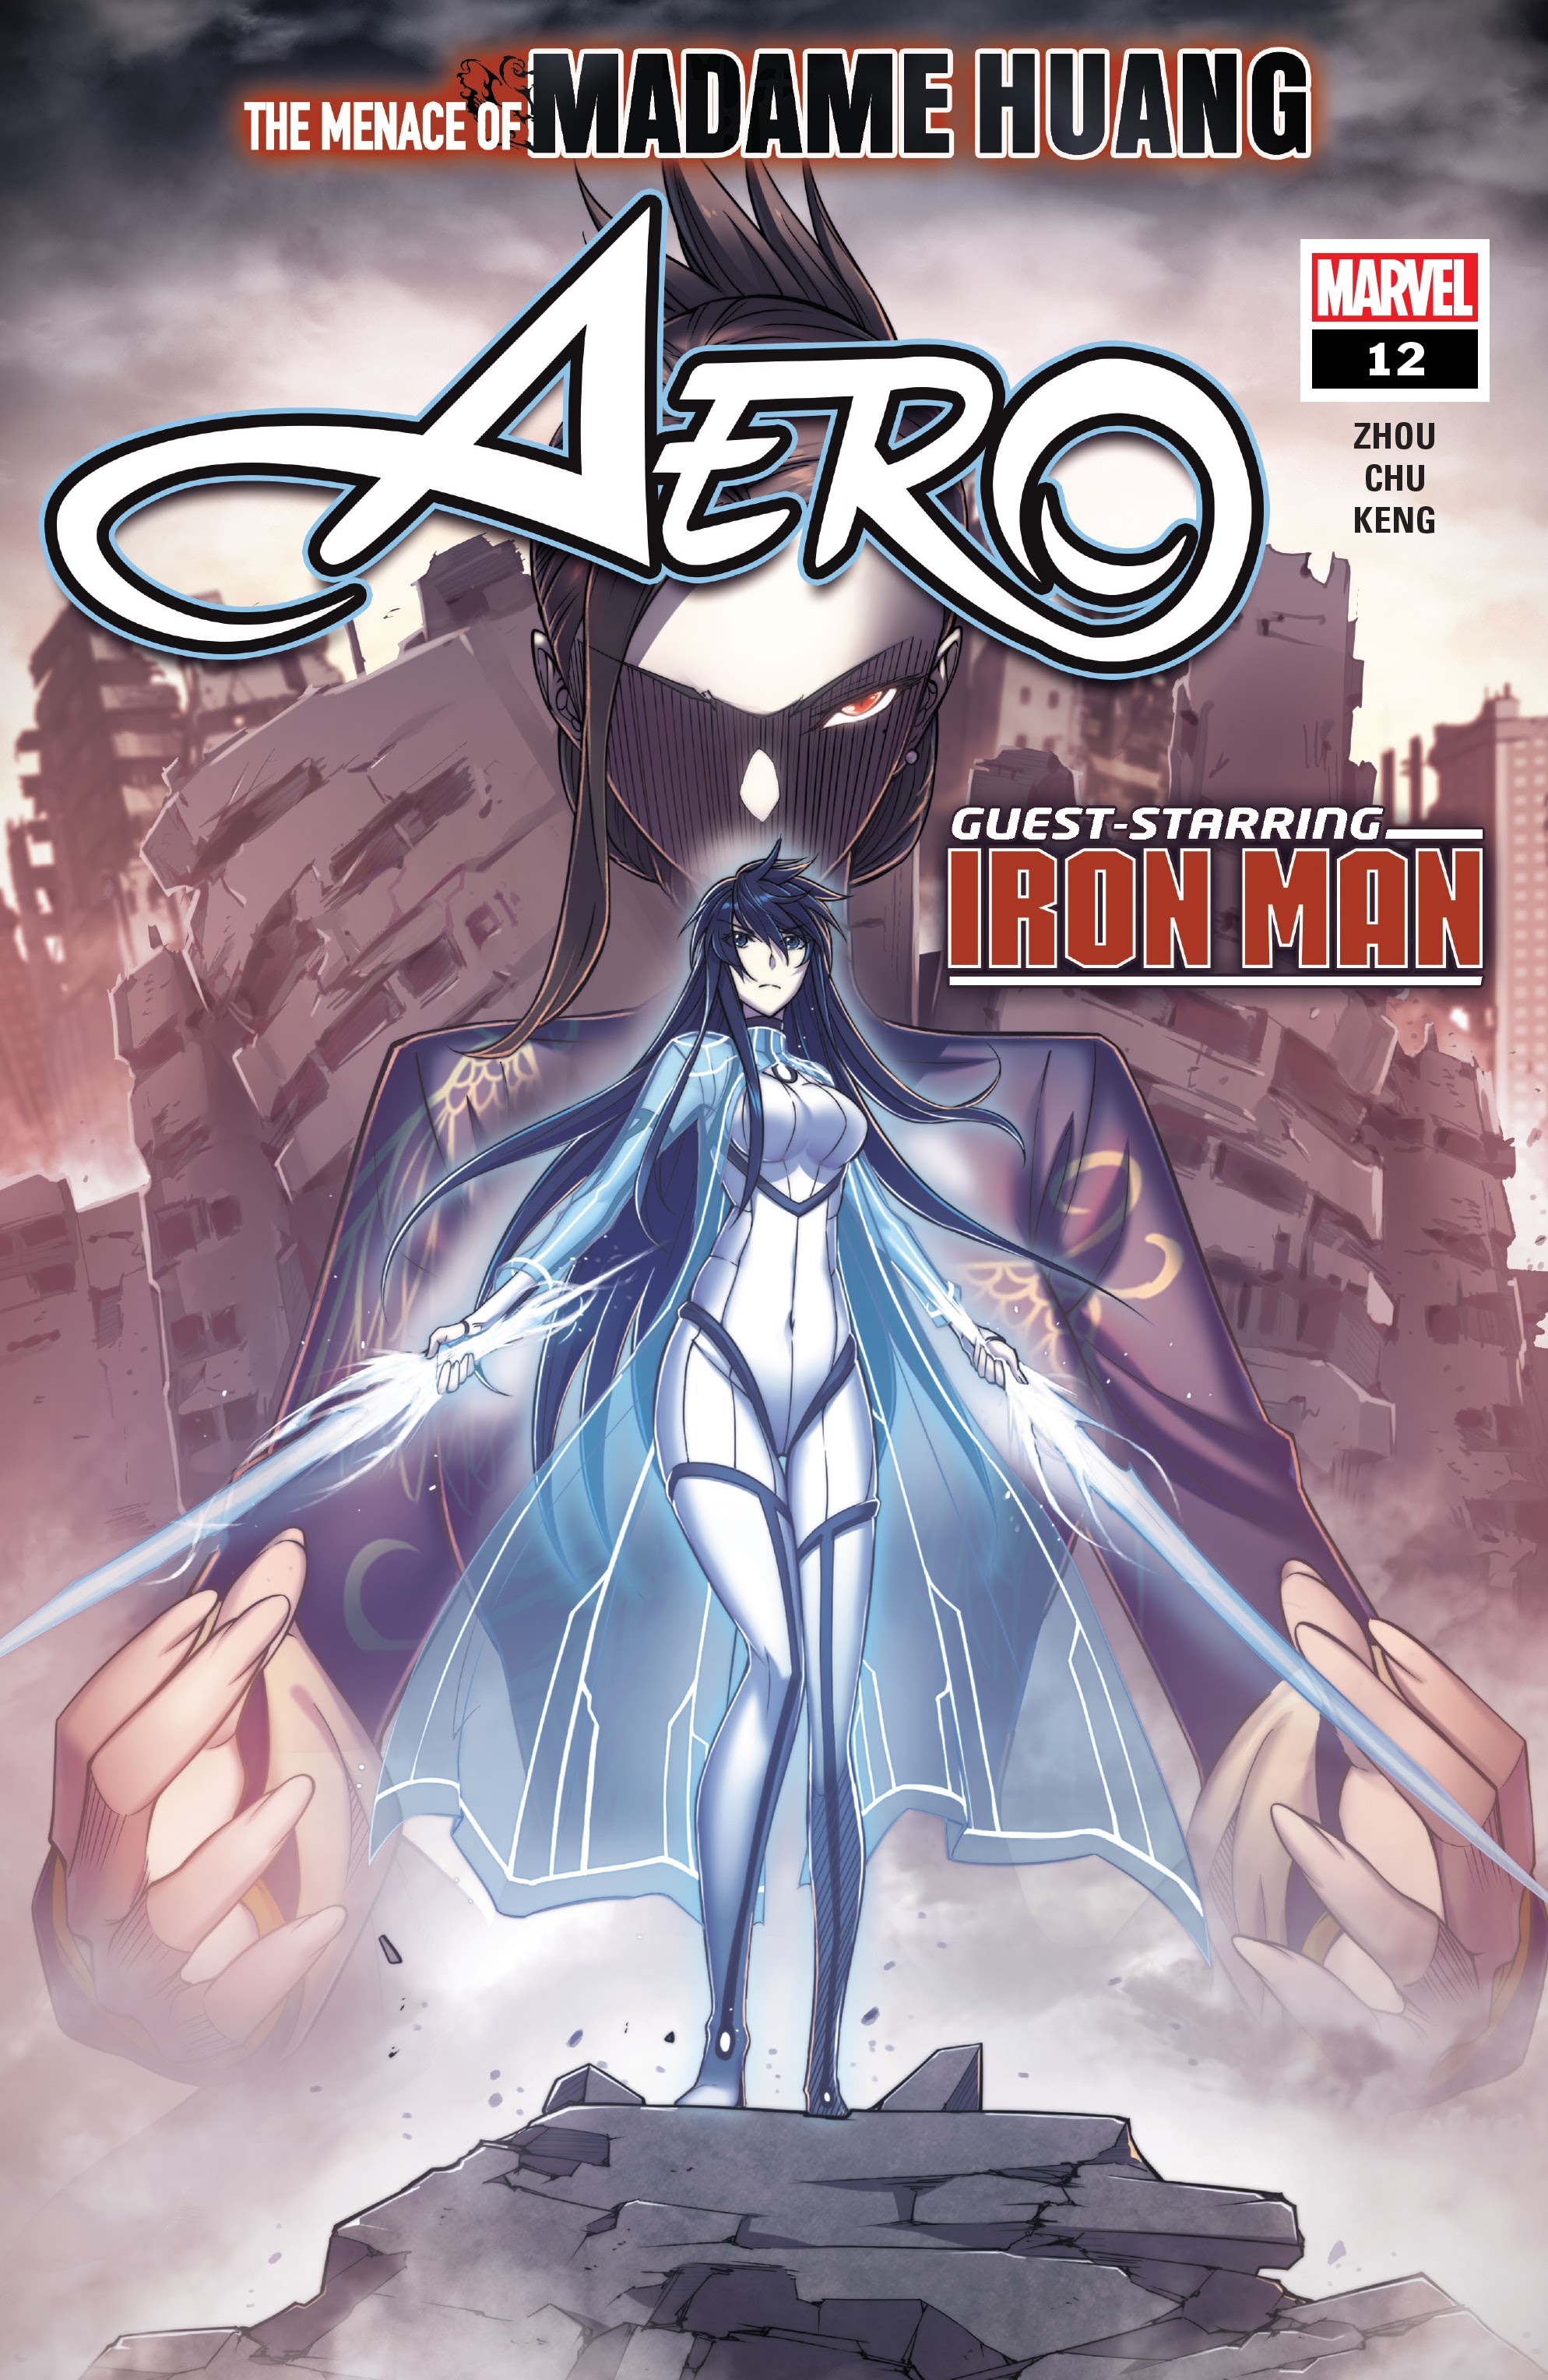 Read online Aero comic -  Issue #12 - 1